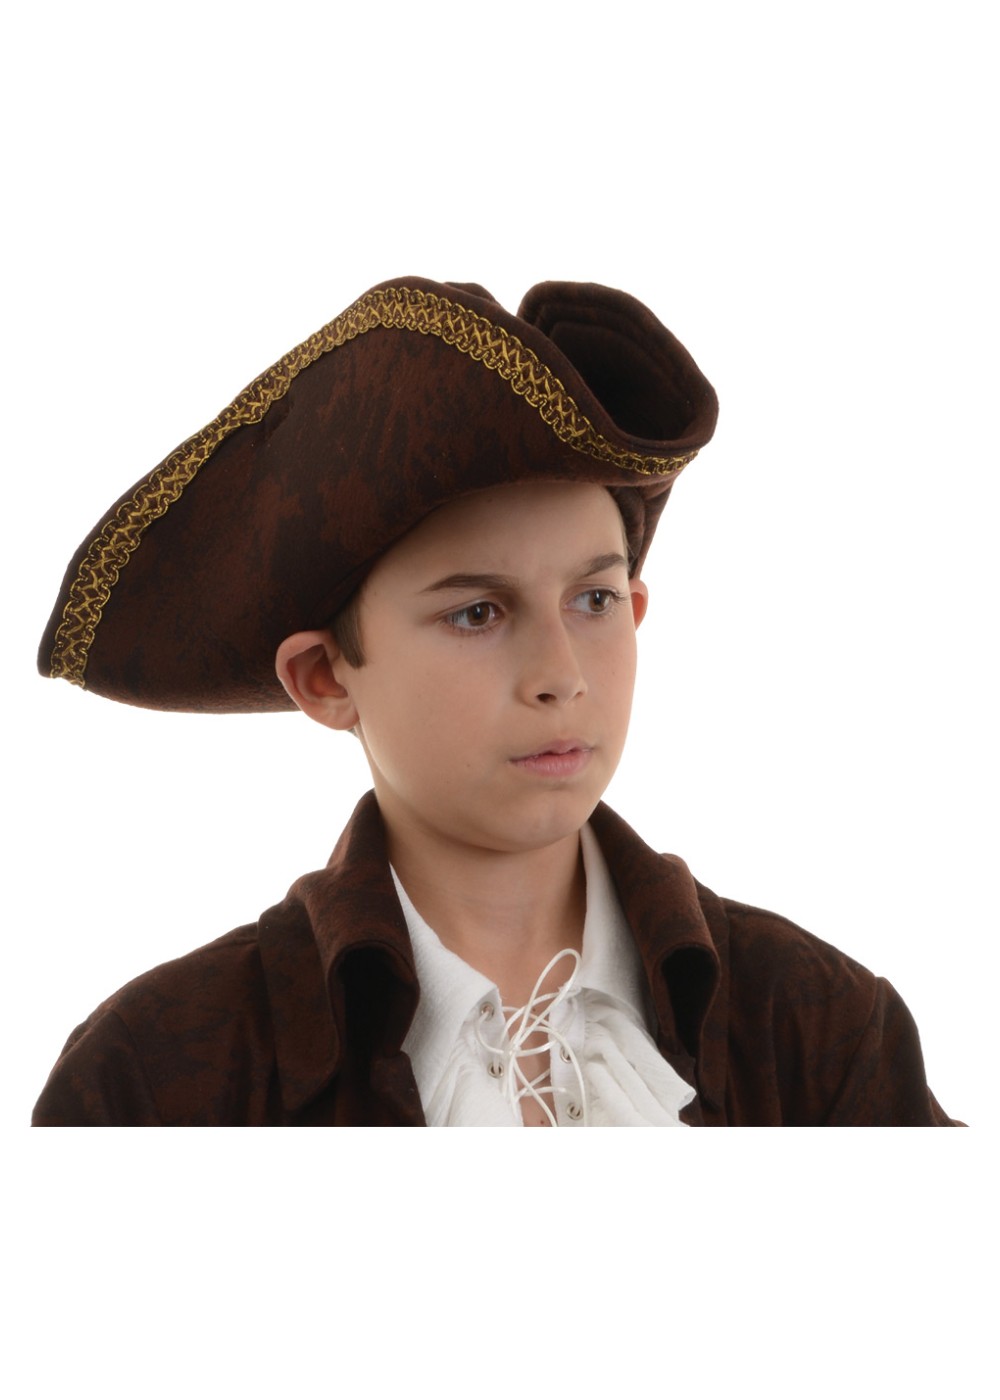 Pirate Captain Brown Hat